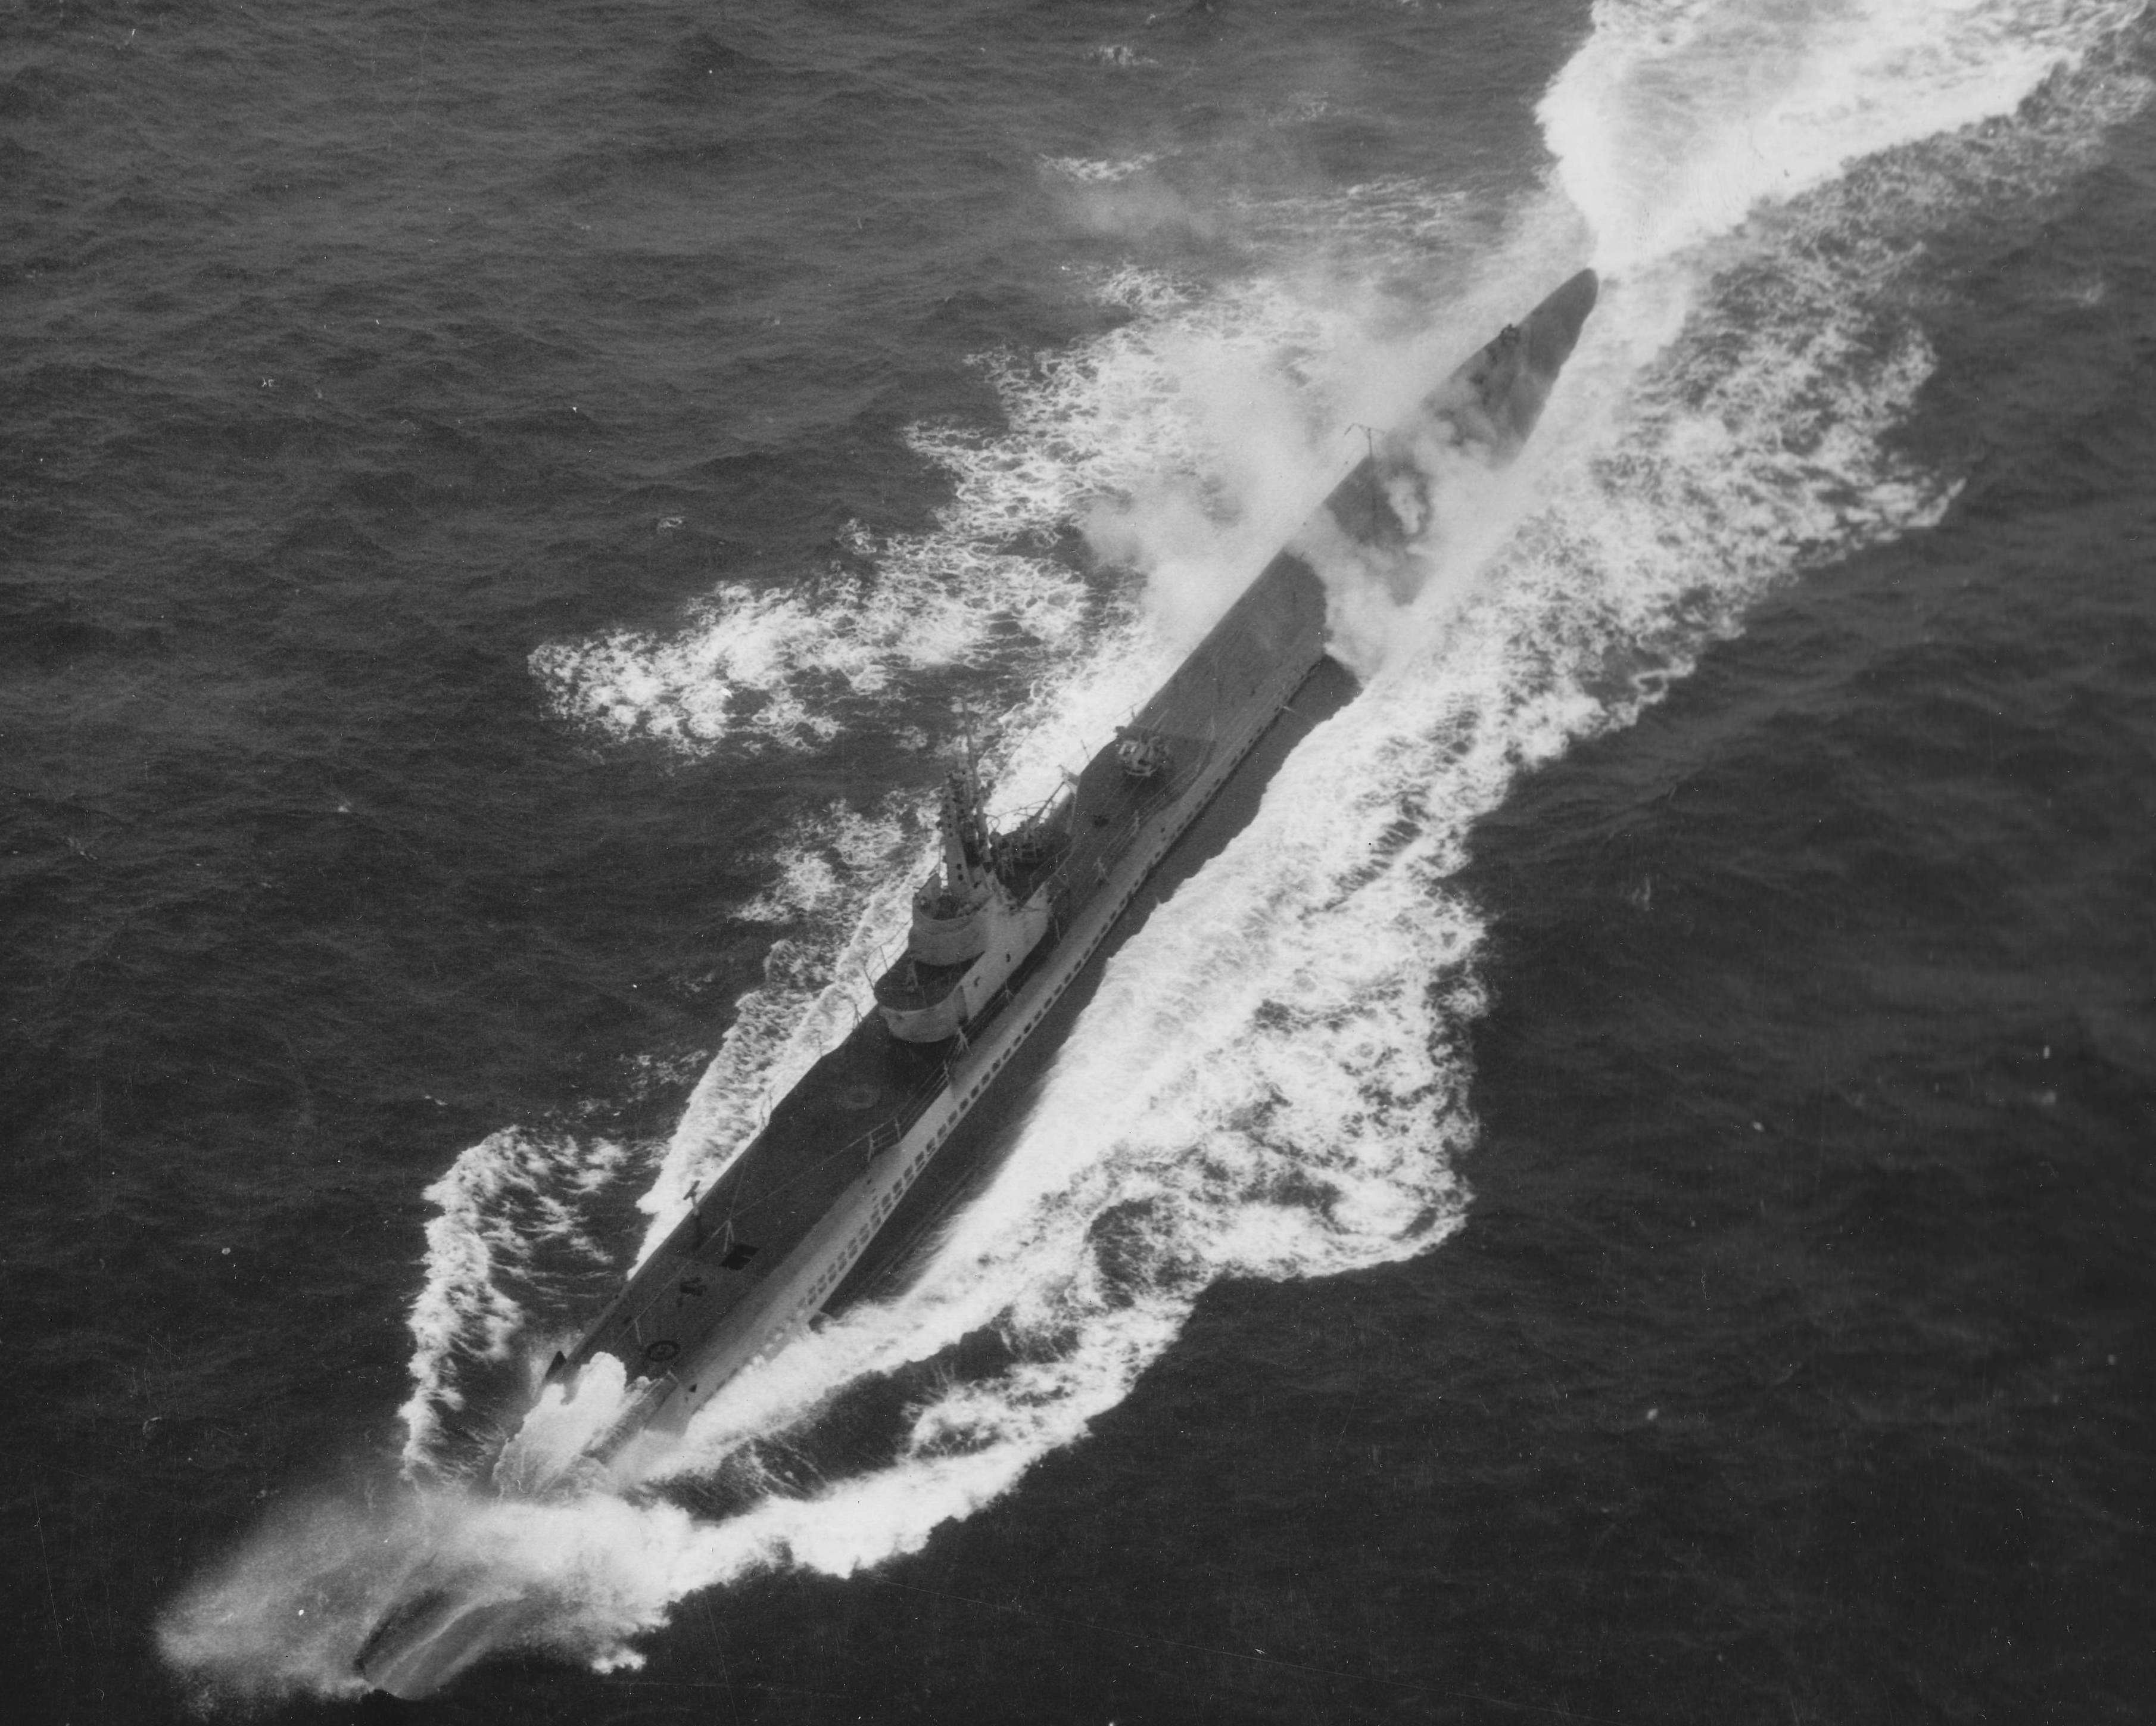 USS Spot underway in the Pacific Ocean, 24 Sep 1944, photo 1 of 3